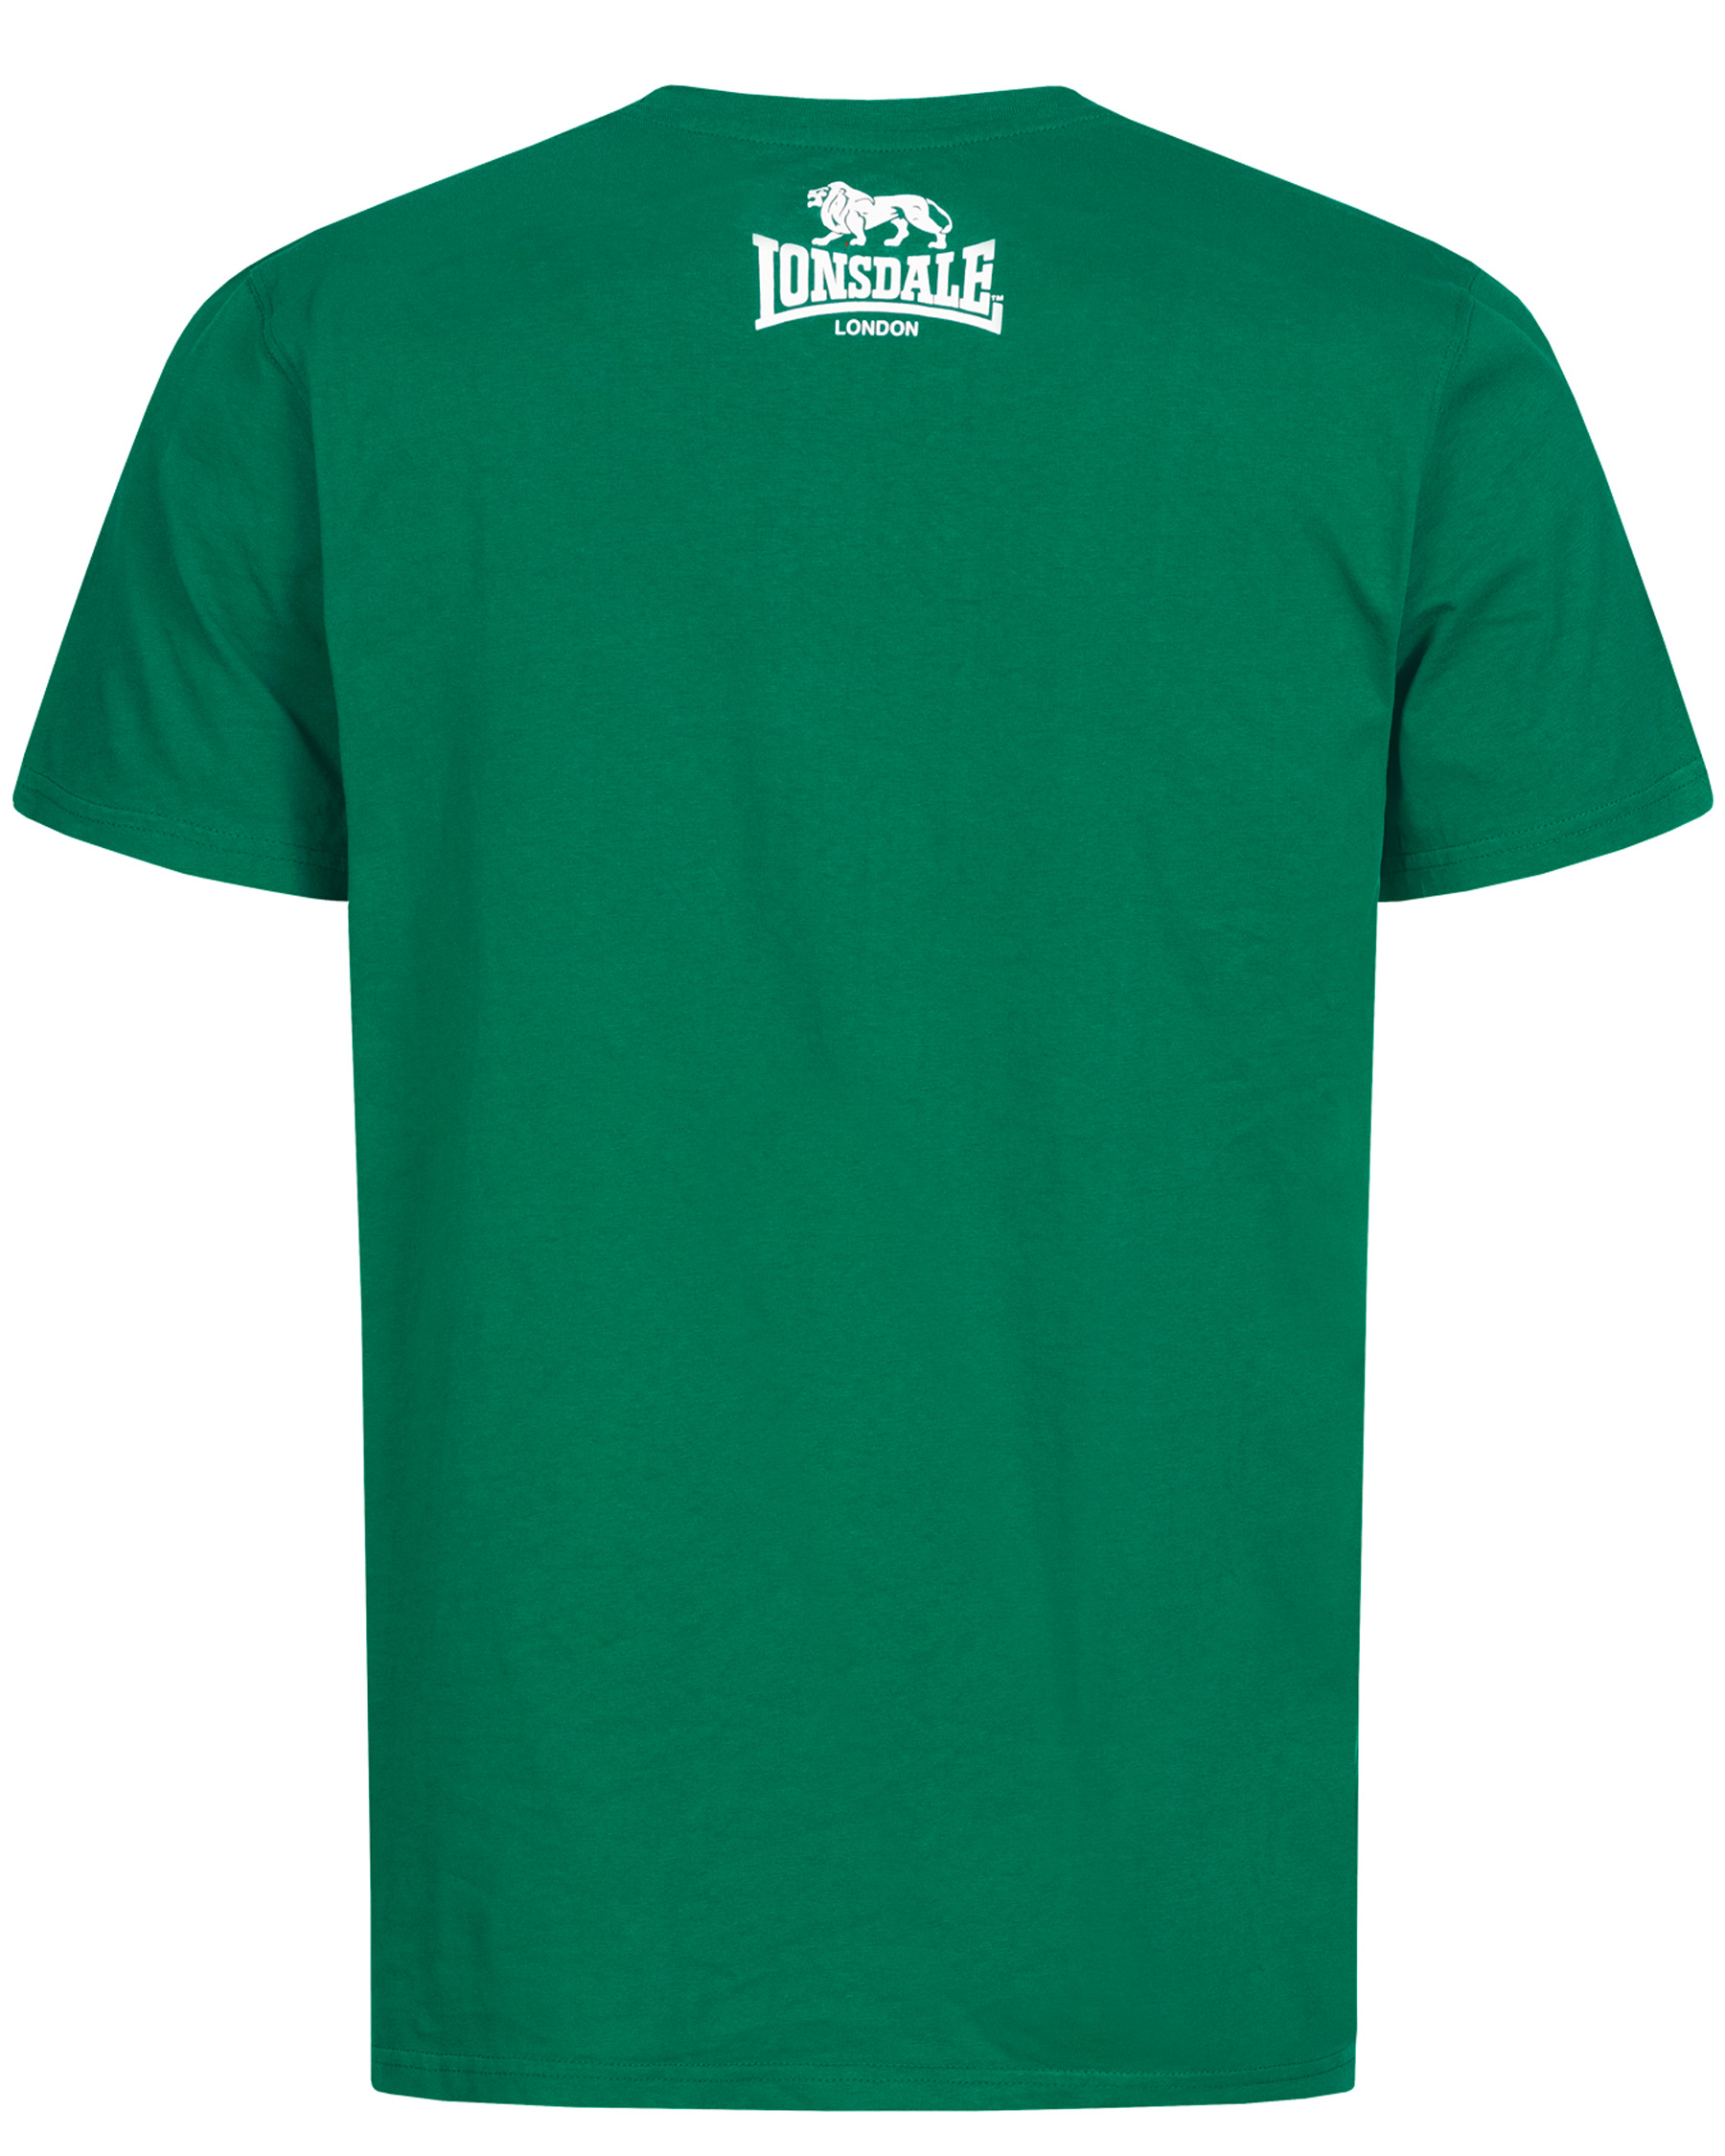 Lonsdale T-Shirt Logo - Mens T-Shirt - Lonsdale London